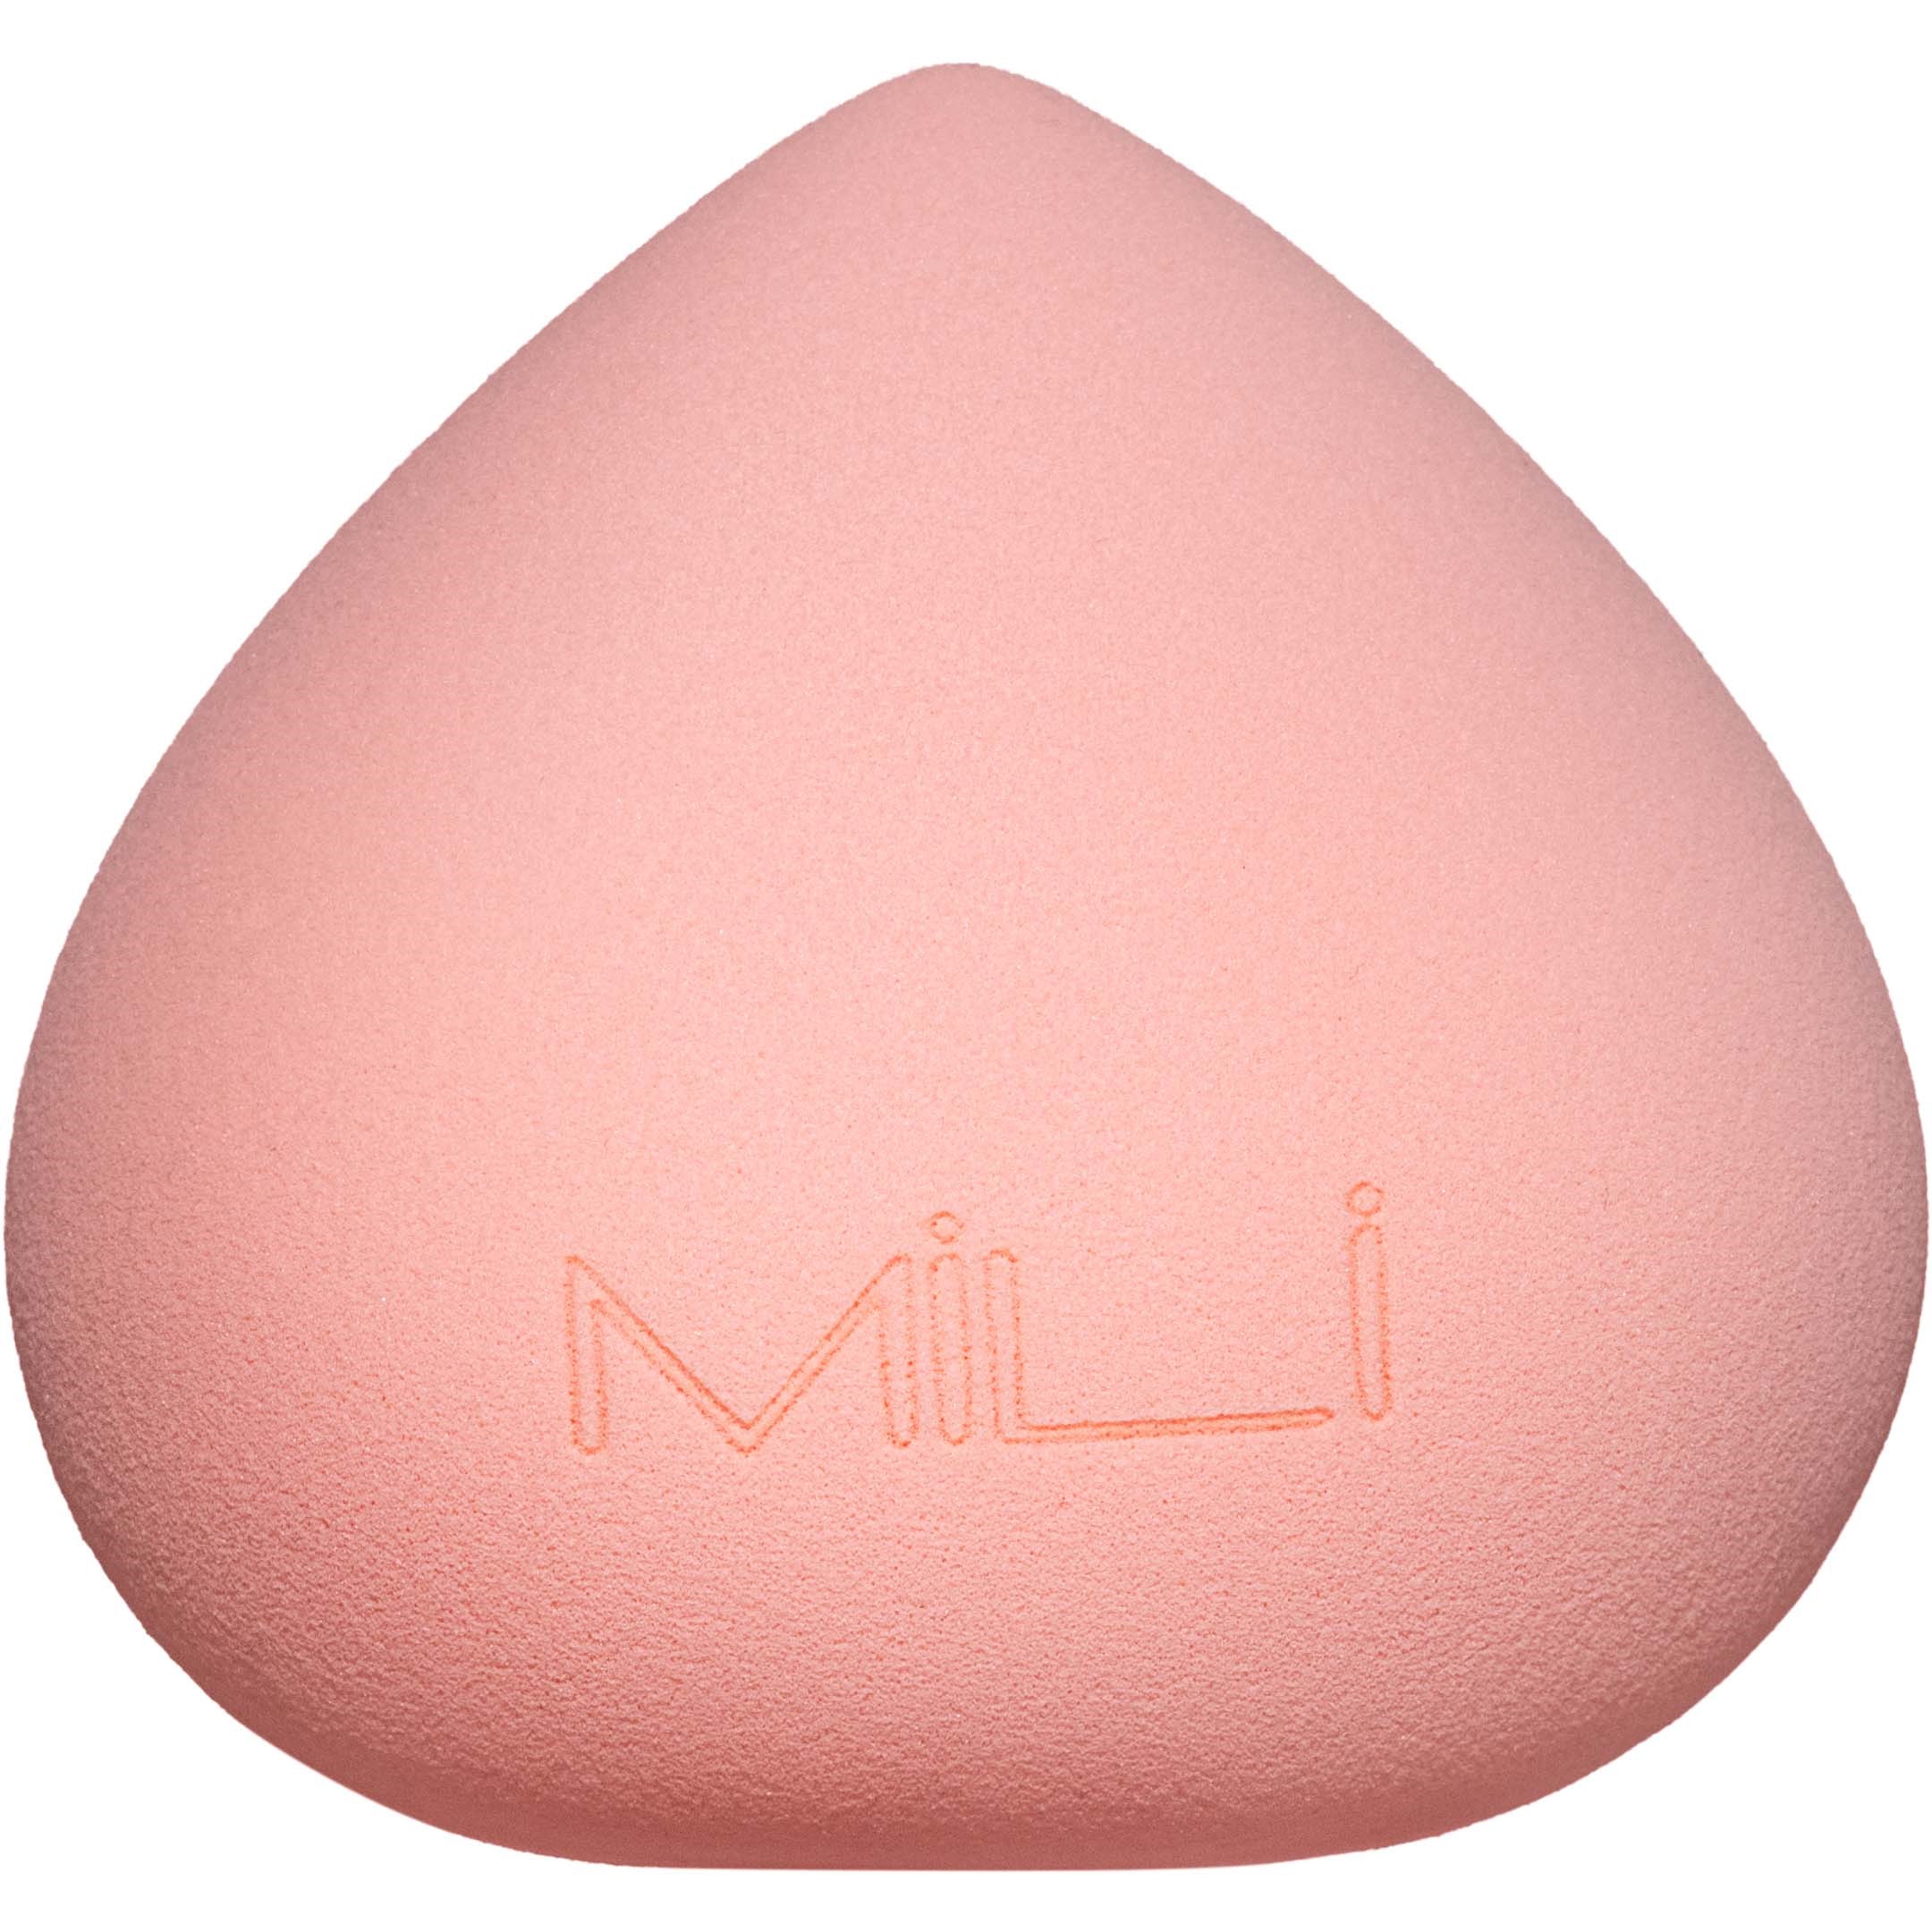 MILI Cosmetics Marshmallow Sponge Pink